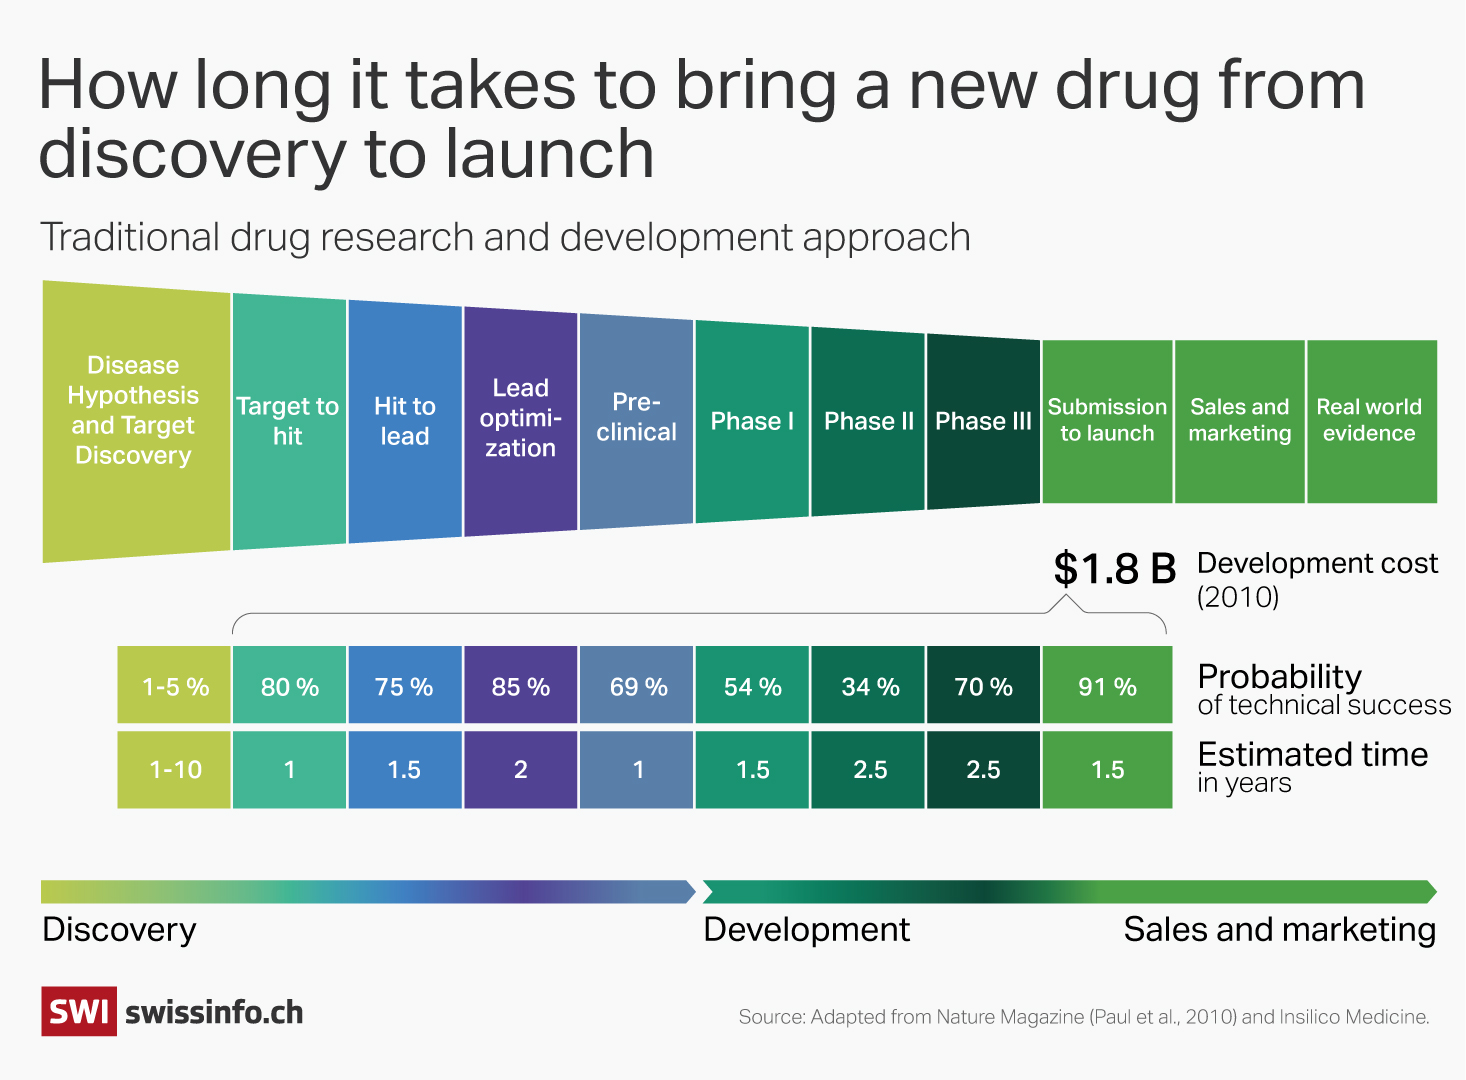 drug development